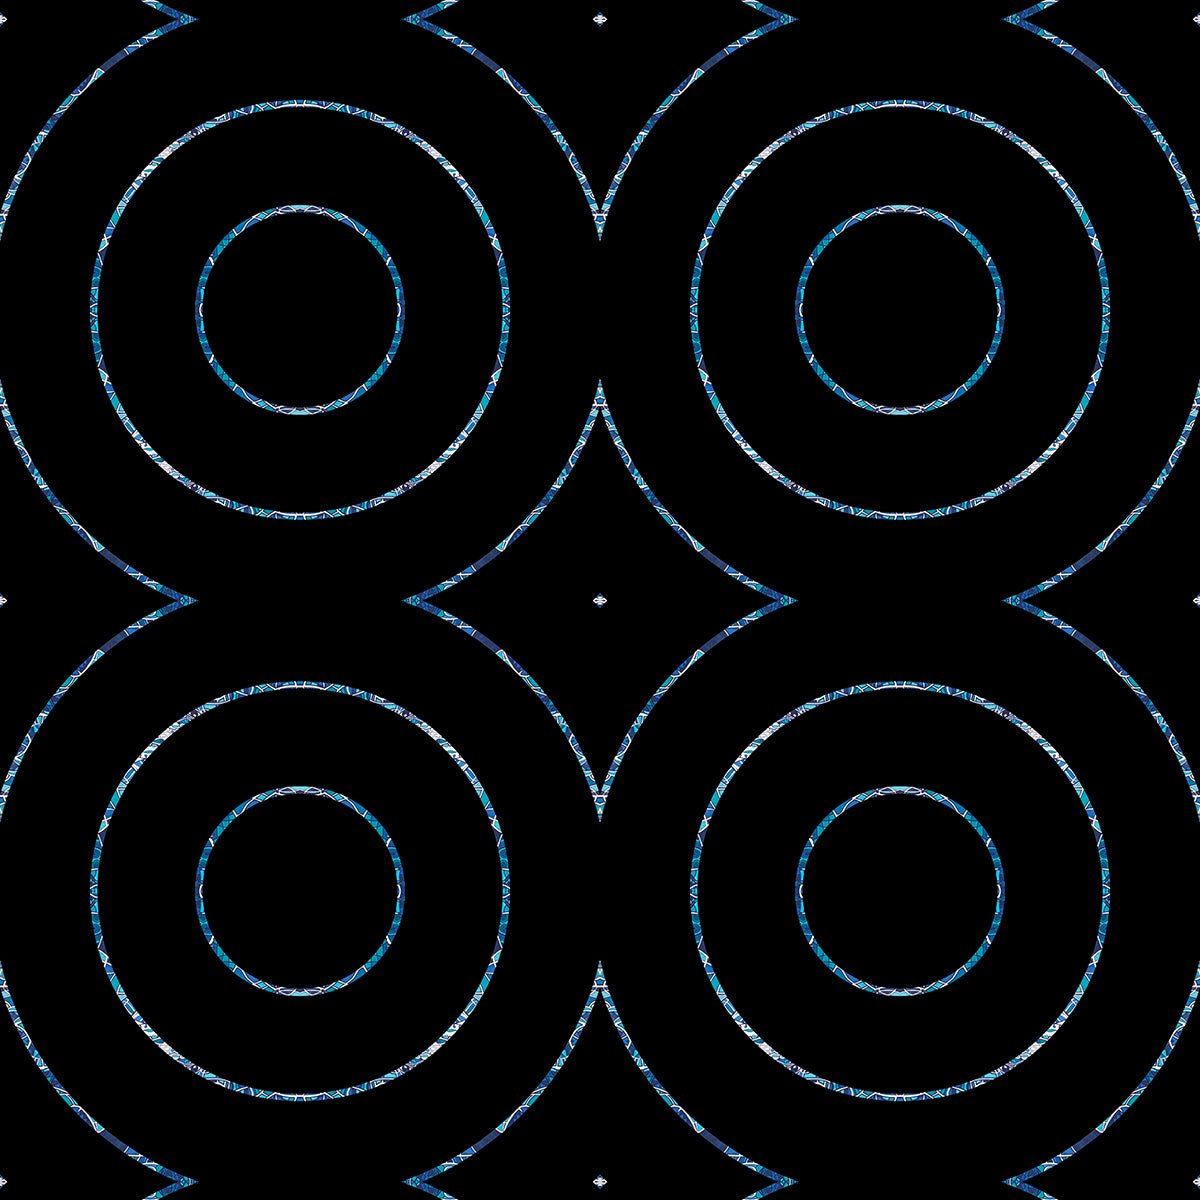 Badetuch • dezente Kreise – blau, schwarz - Wonderwazek